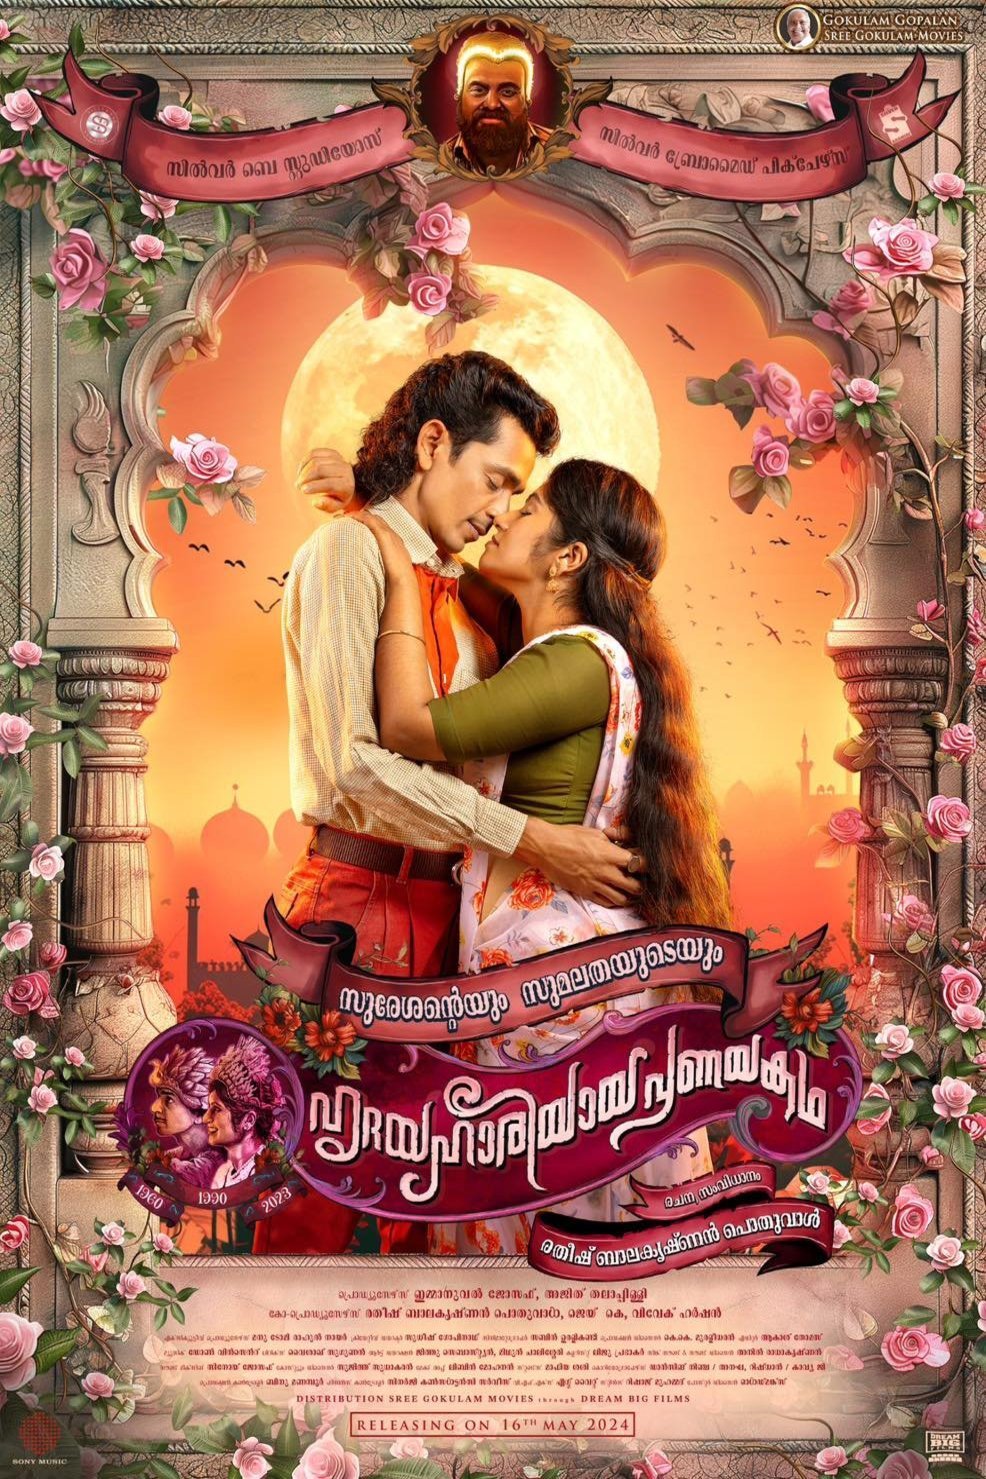 Malayalam poster of the movie Sureshinteyum Sumalathayudeyum Hridayahariyaya Pranayakatha